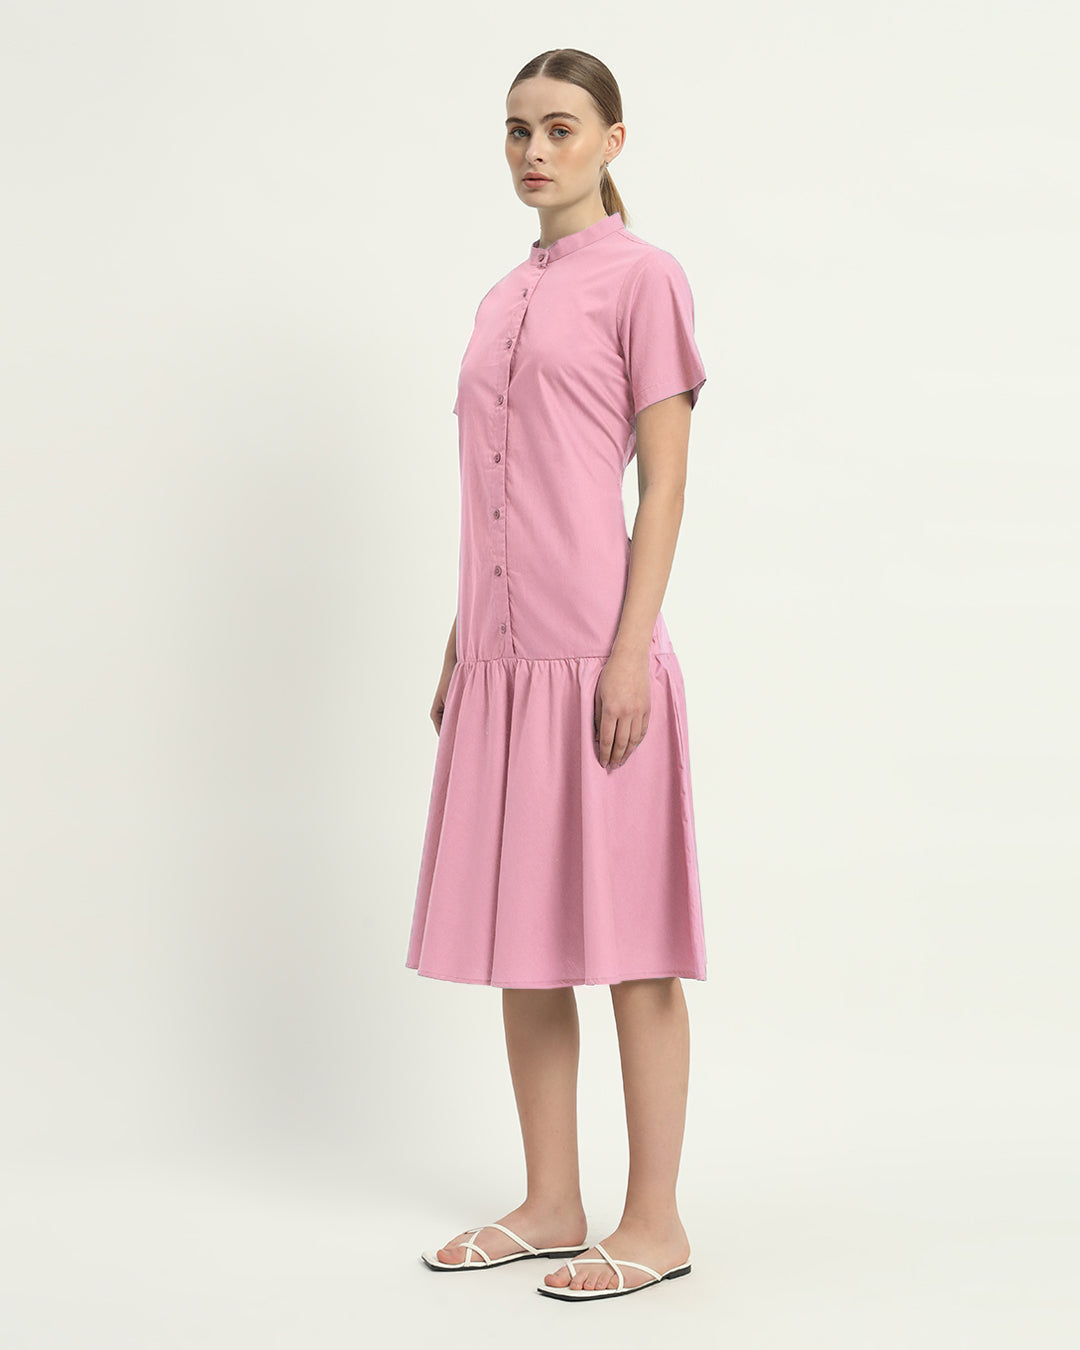 The Melrose Fondant Pink Cotton Dress